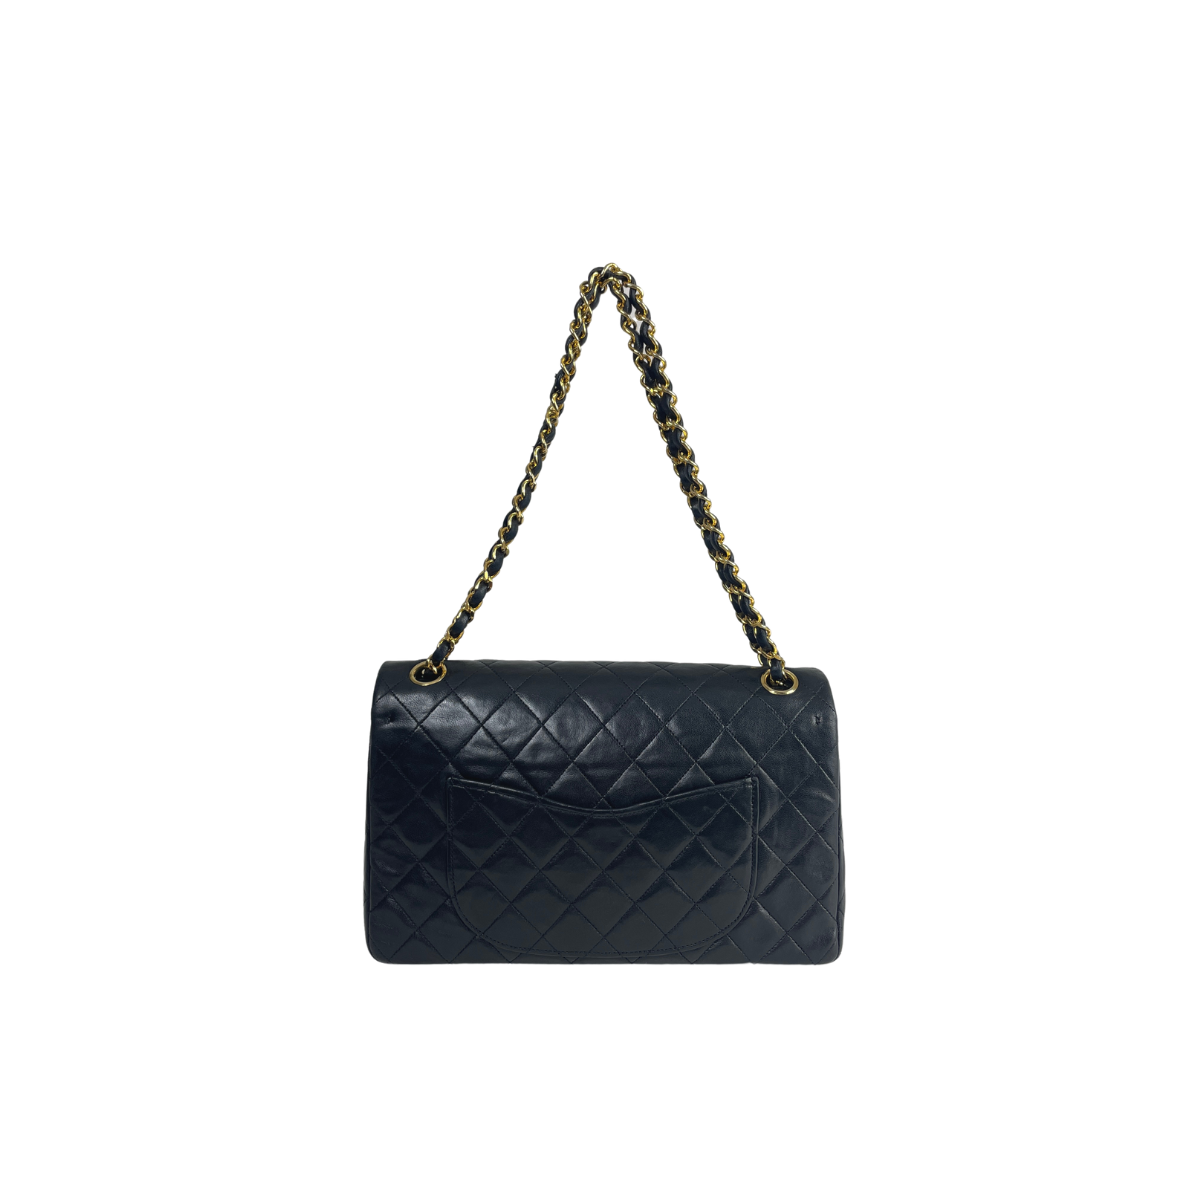 Chanel Classic Flap Lambskin Leather Tote Bag Beige/Black